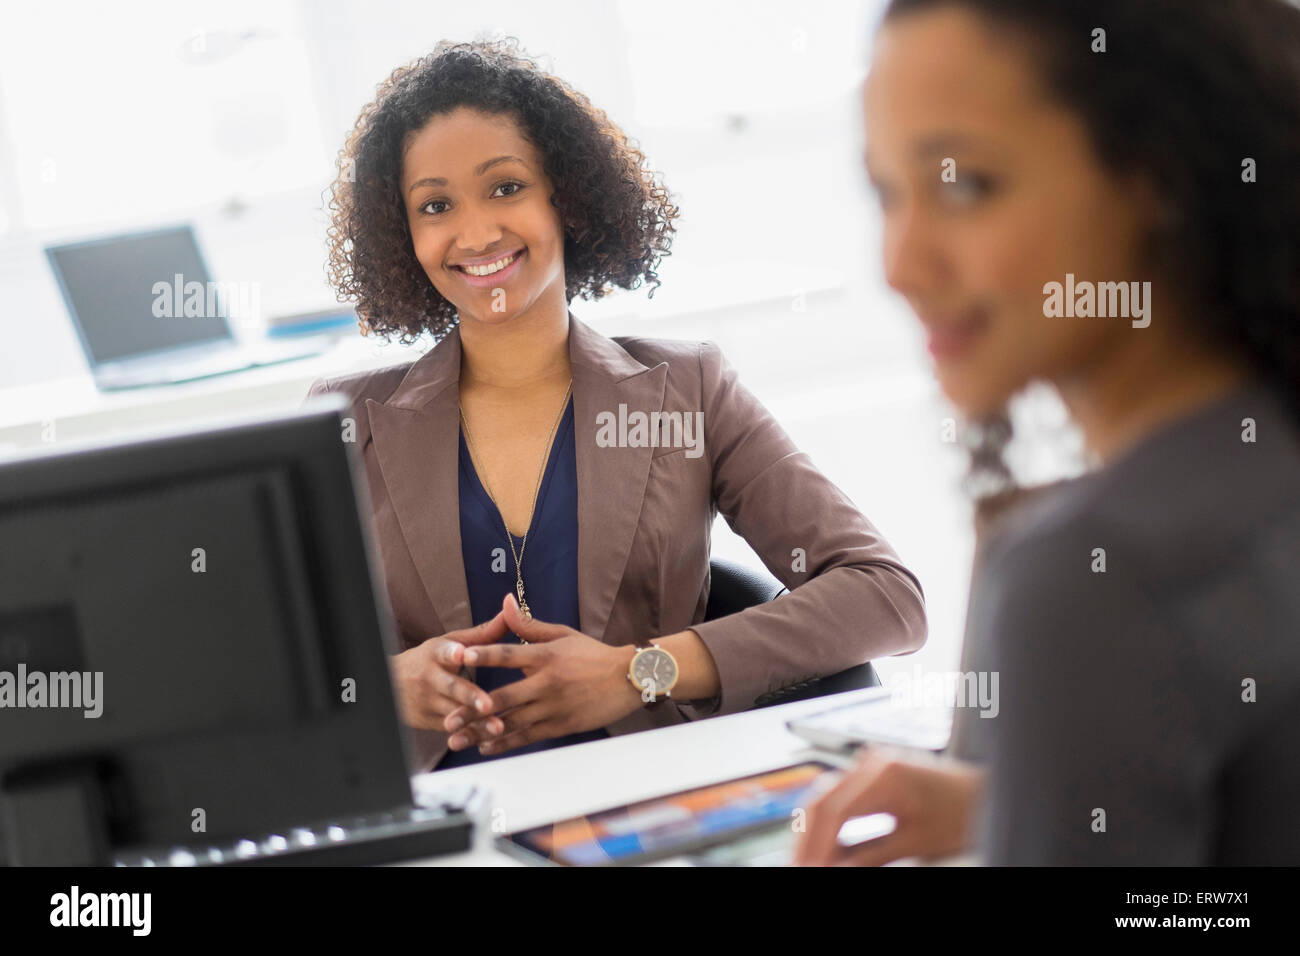 Businesswomen smiling in office meeting Stock Photo